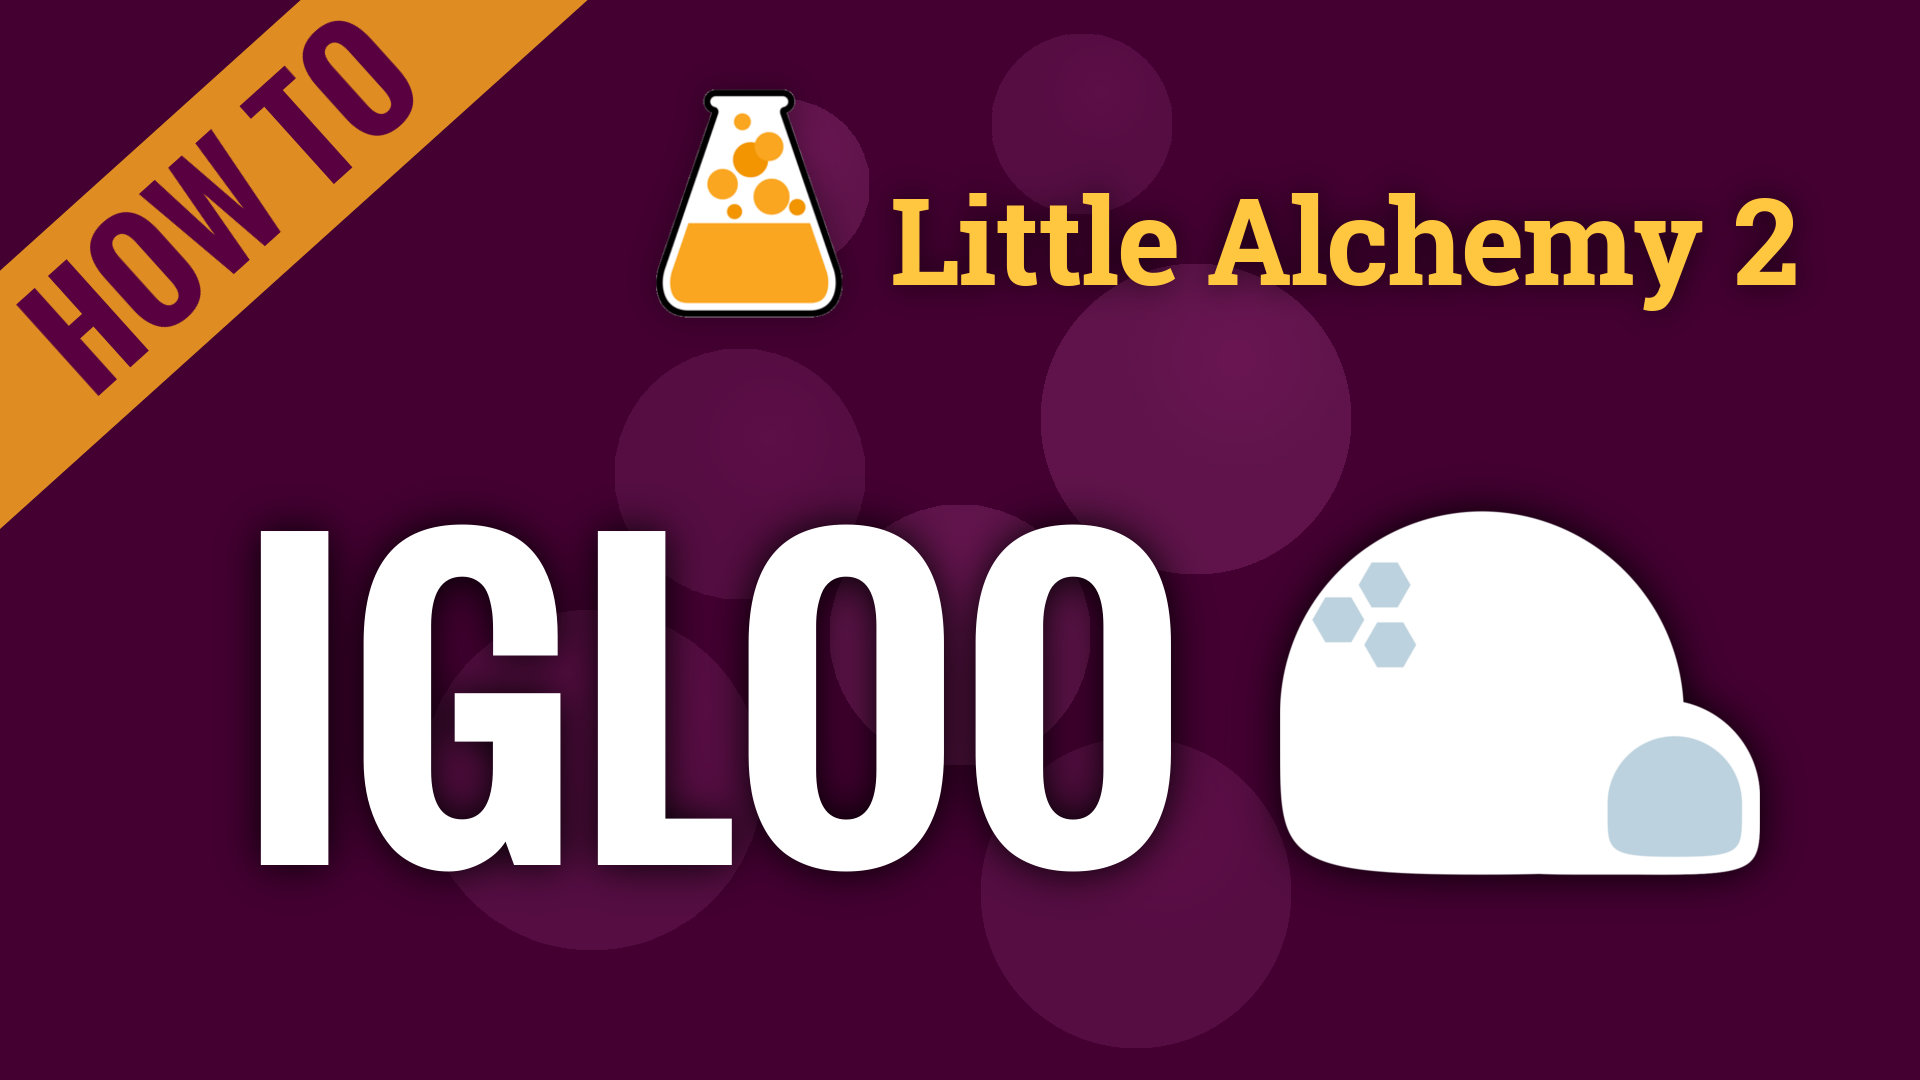 igloo - Little Alchemy 2 Cheats